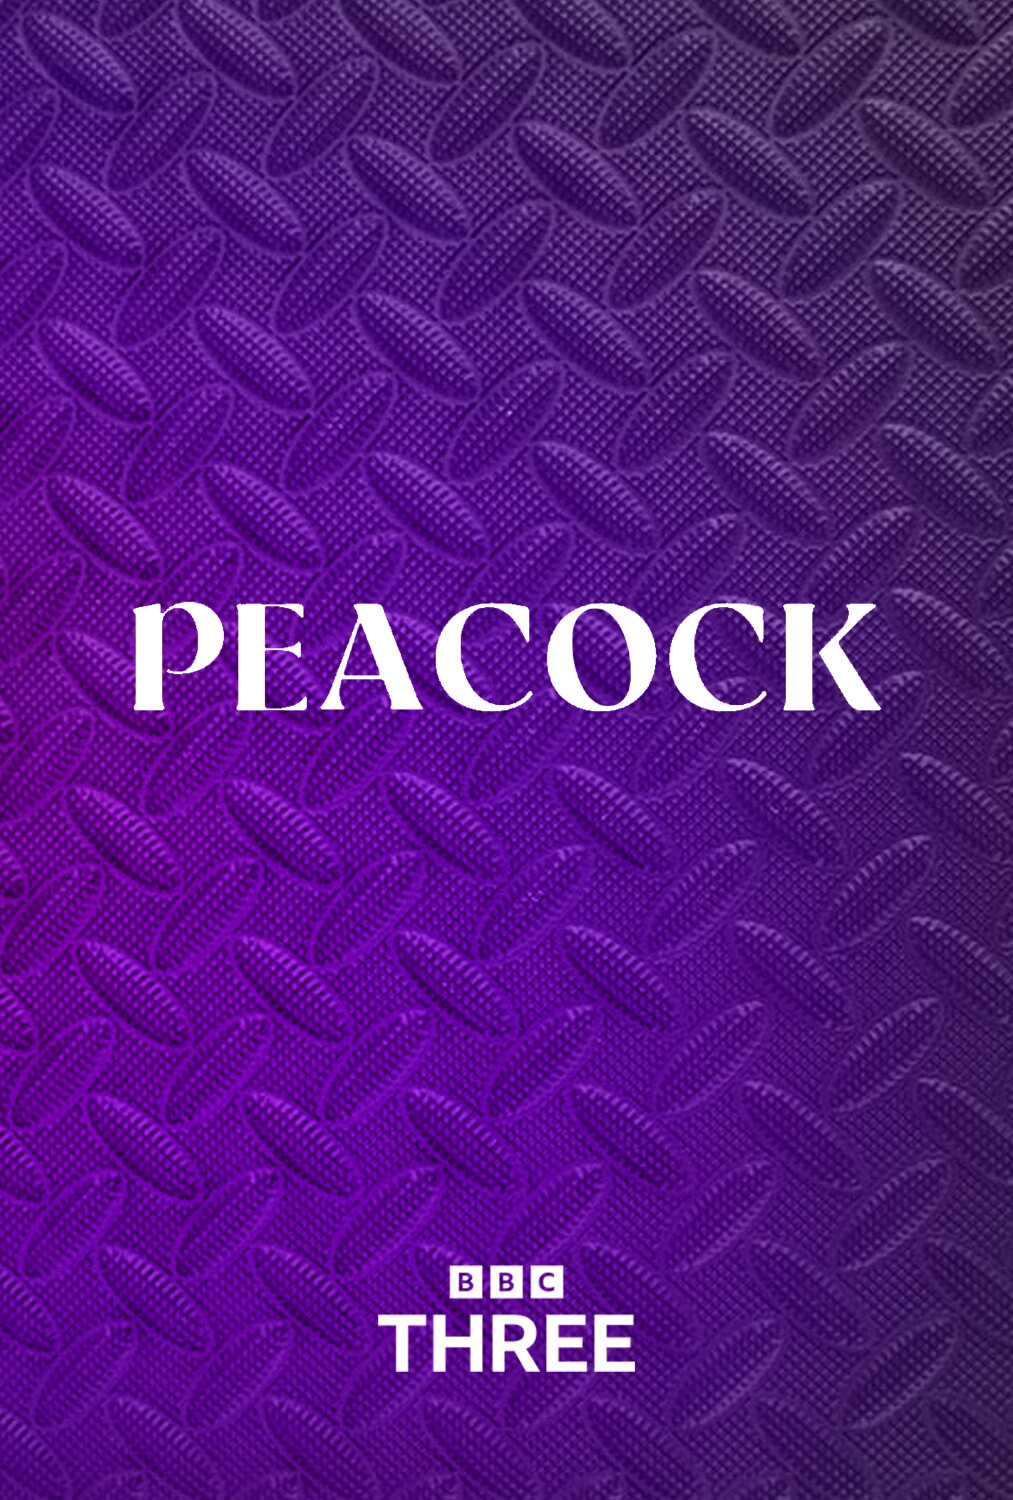 Peacock ne zaman